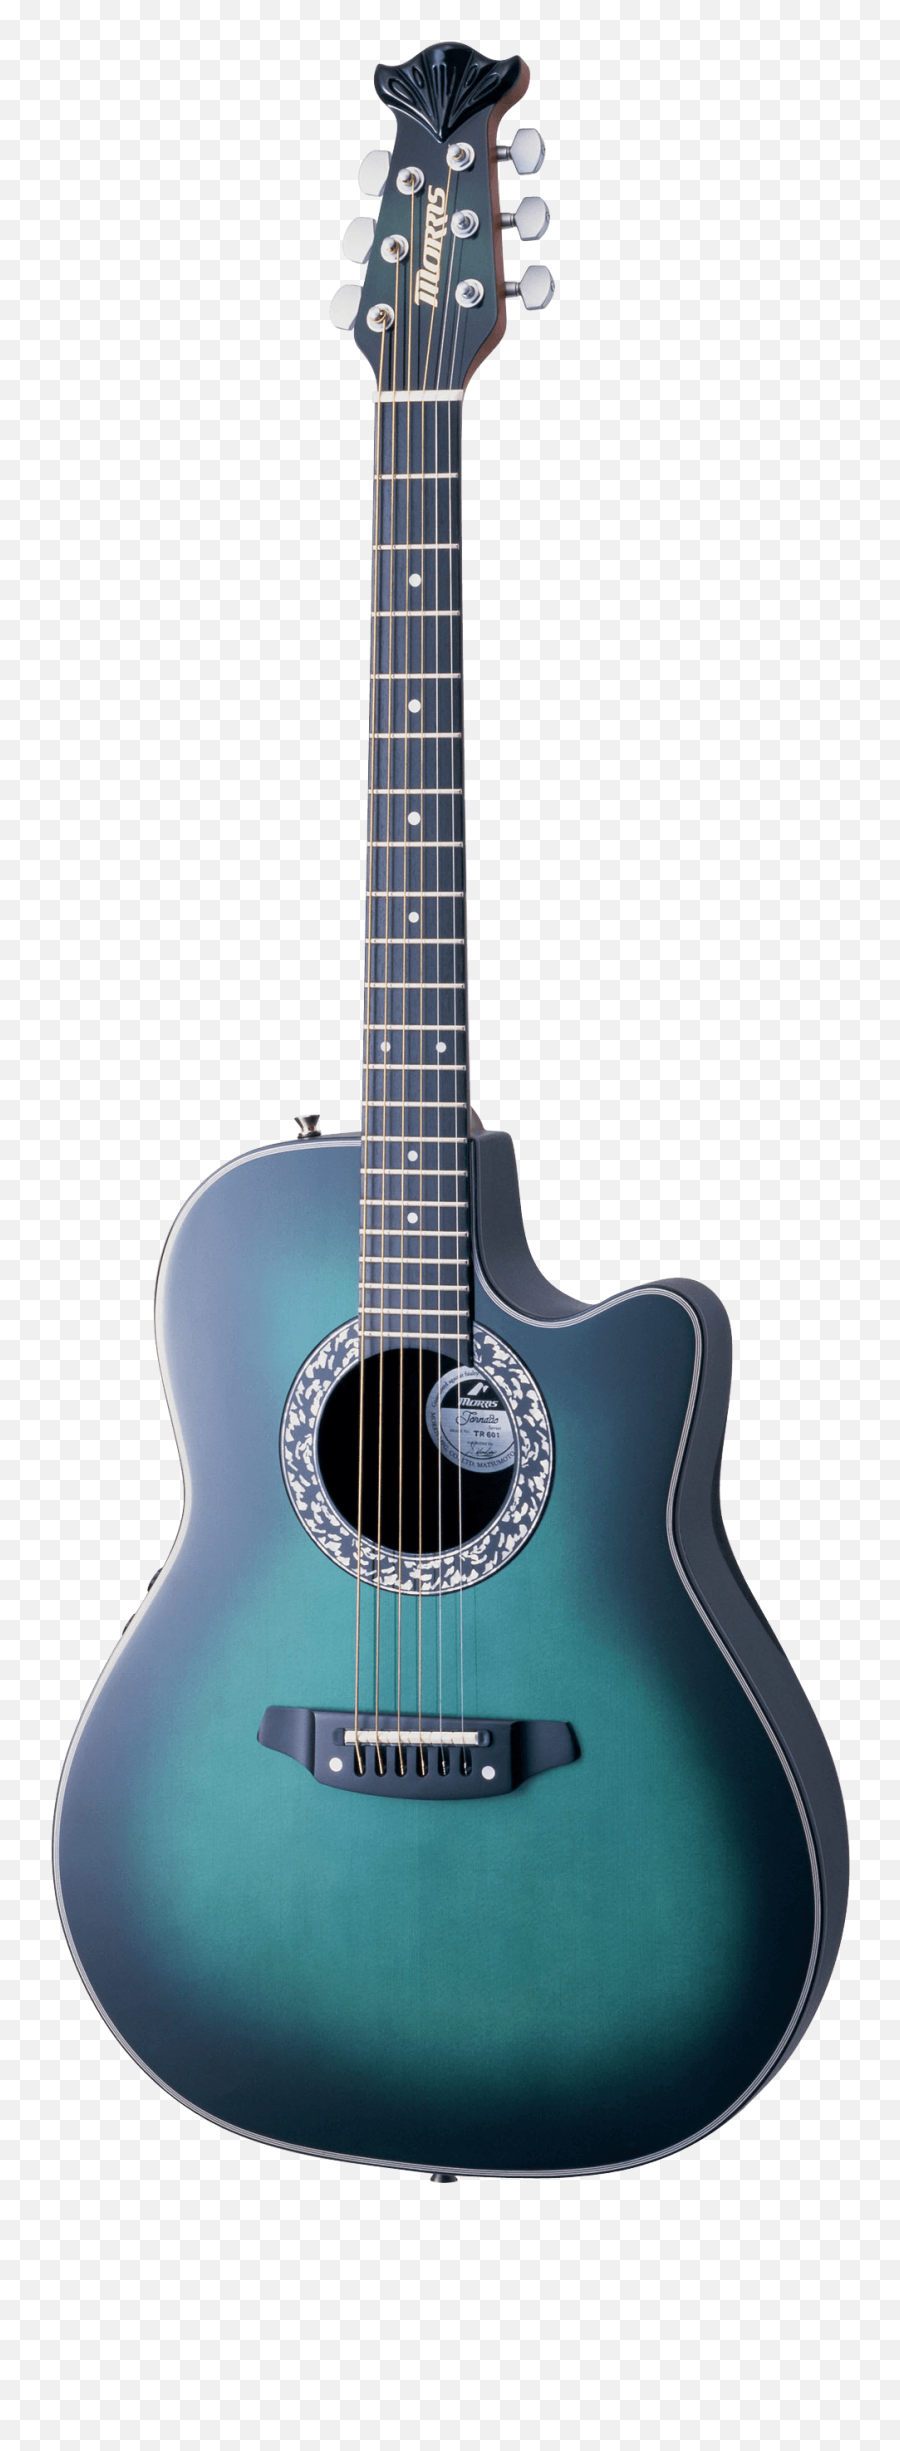 Guitar Png Image Acoustic Guitar Png - Clip Art Library Solid Emoji,Guitar Png